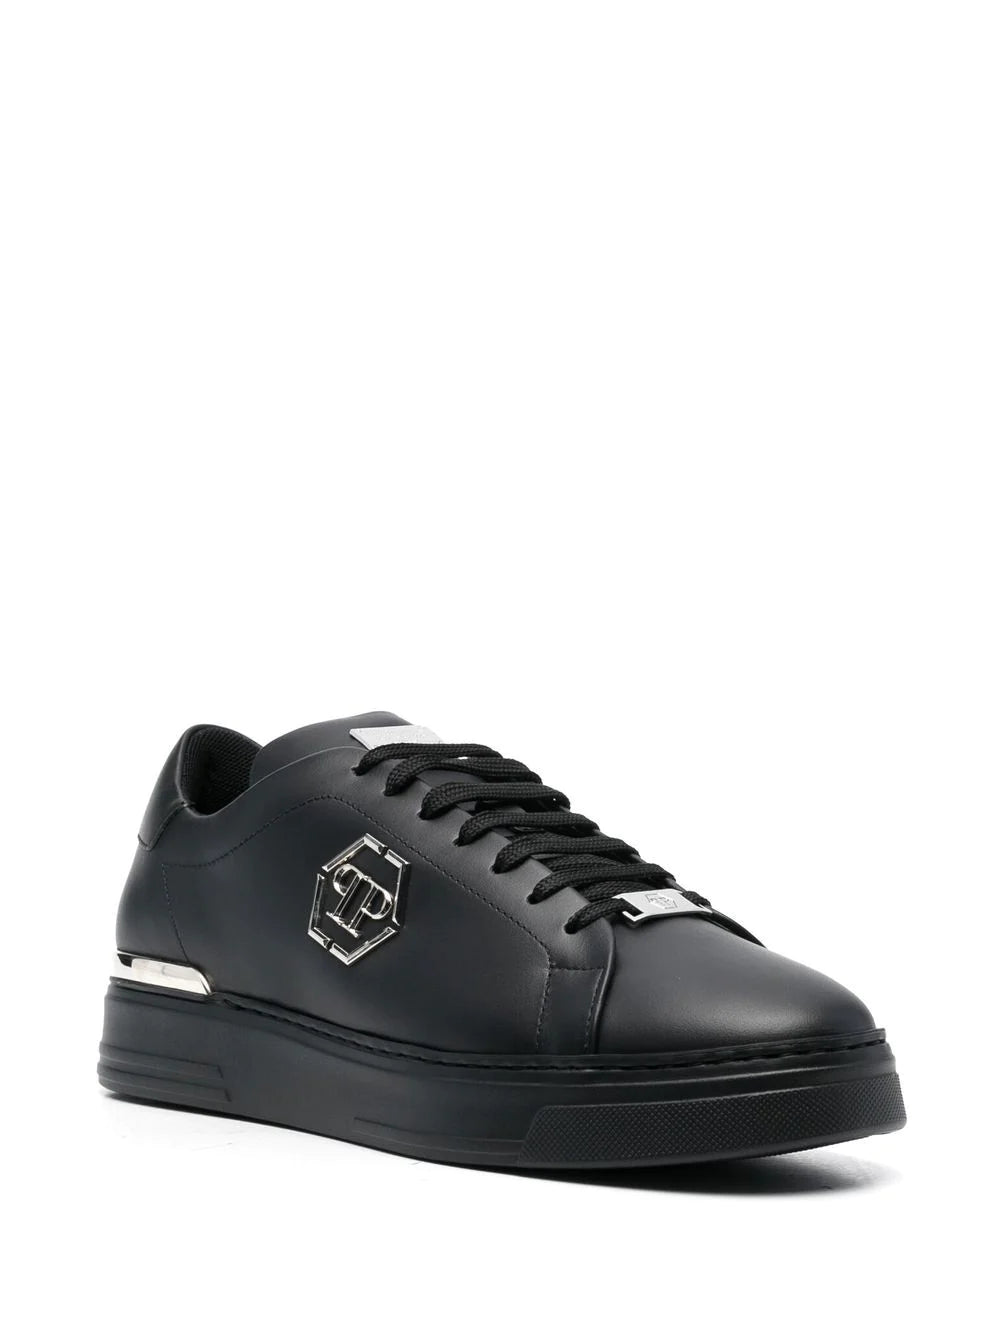 Philipp Plein Black Hexagon Leather Sneakers